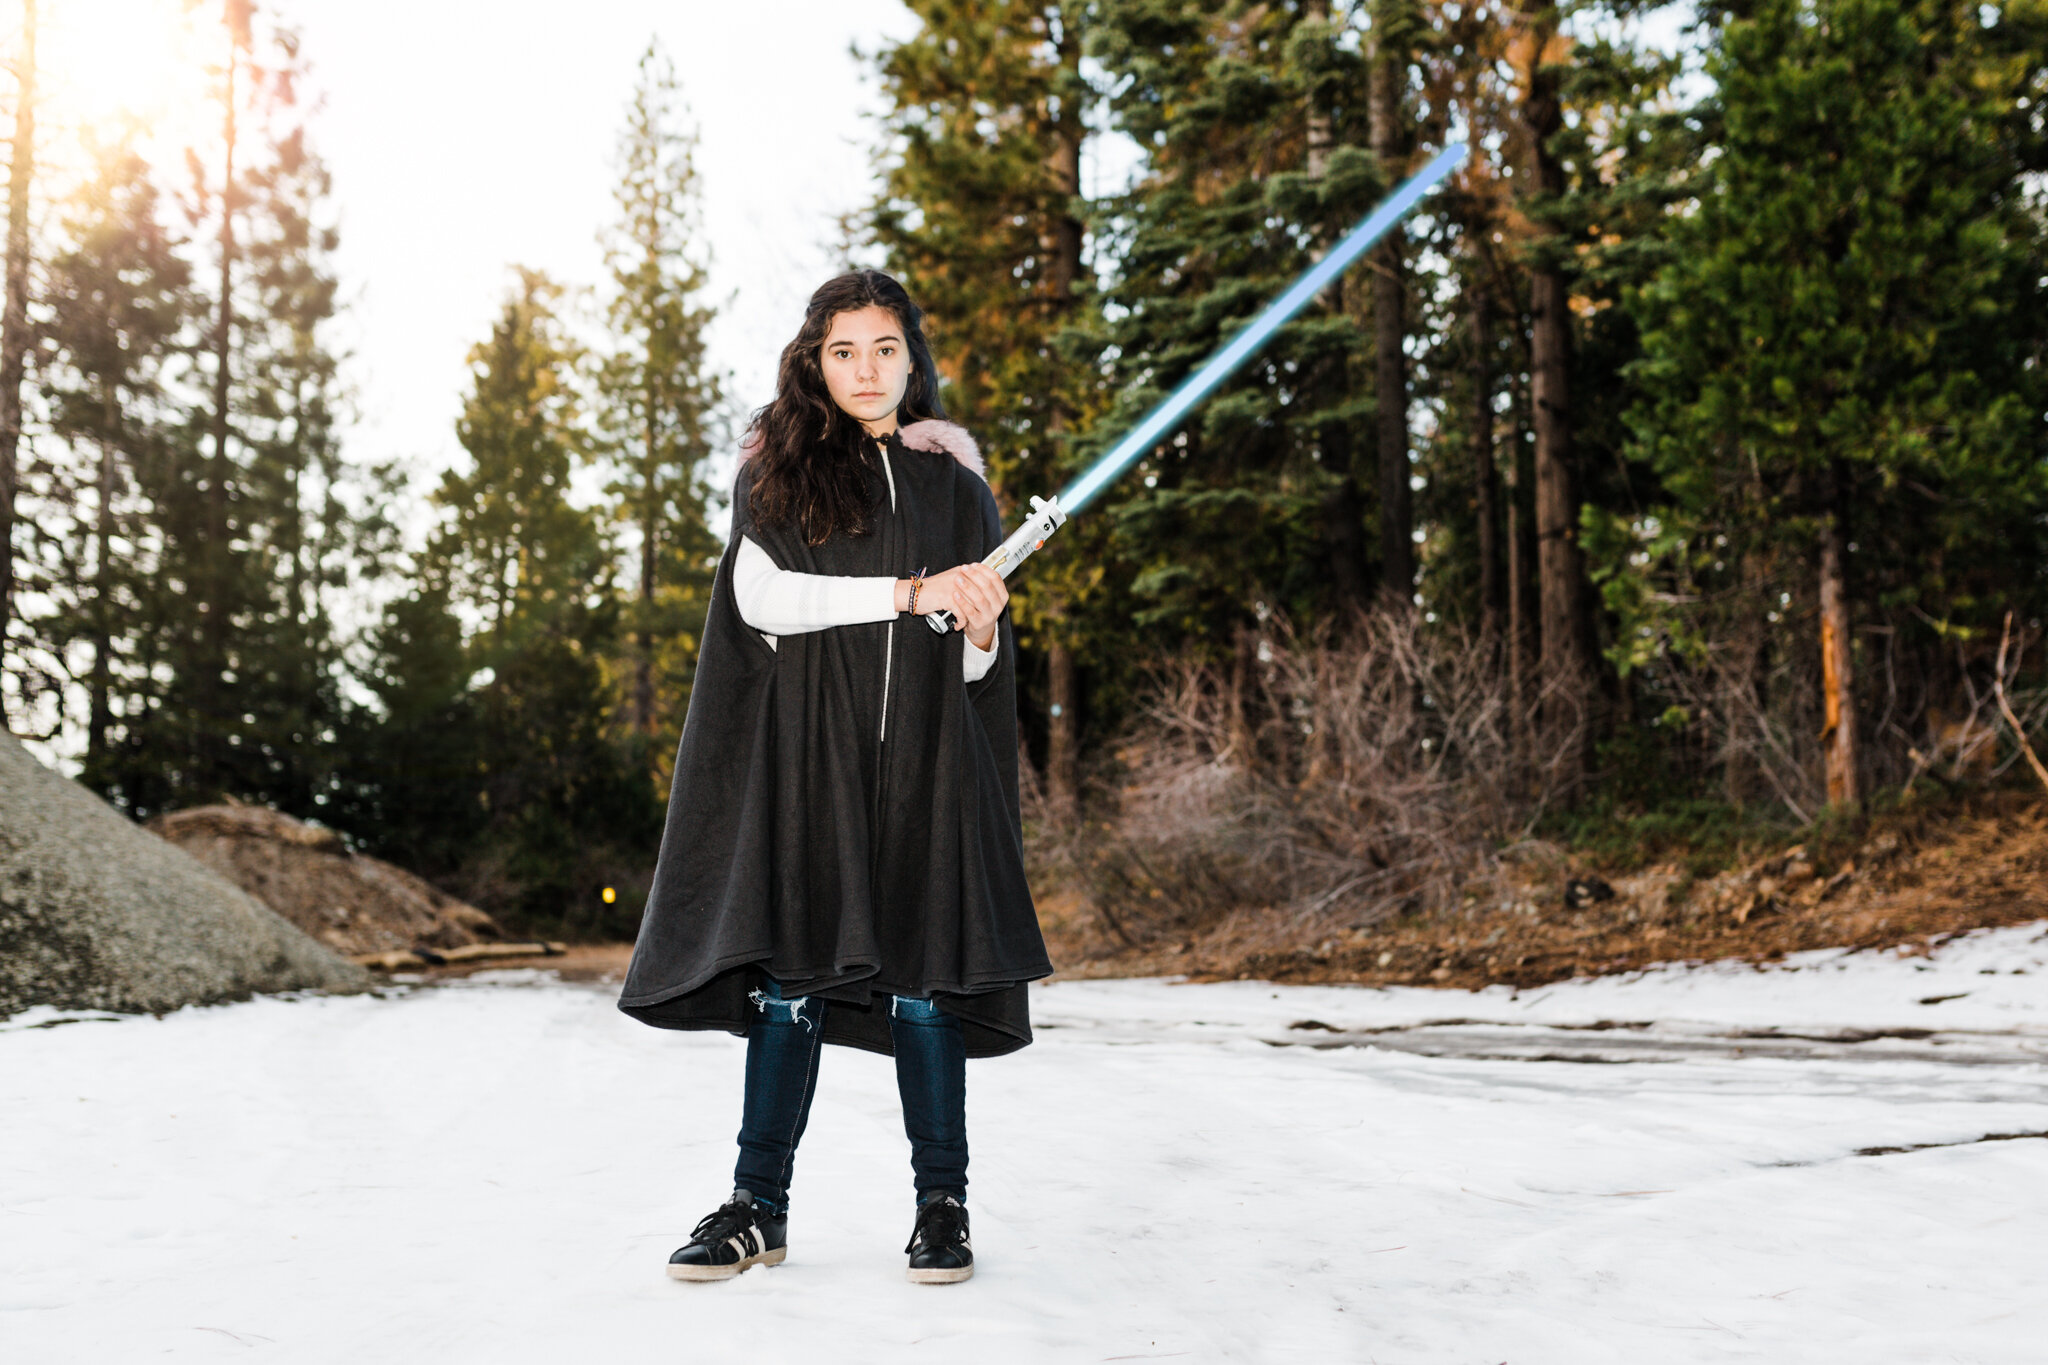 Jedi | Lenkaland Photography and Anika Vodicka Cosplay and Adventure Photos